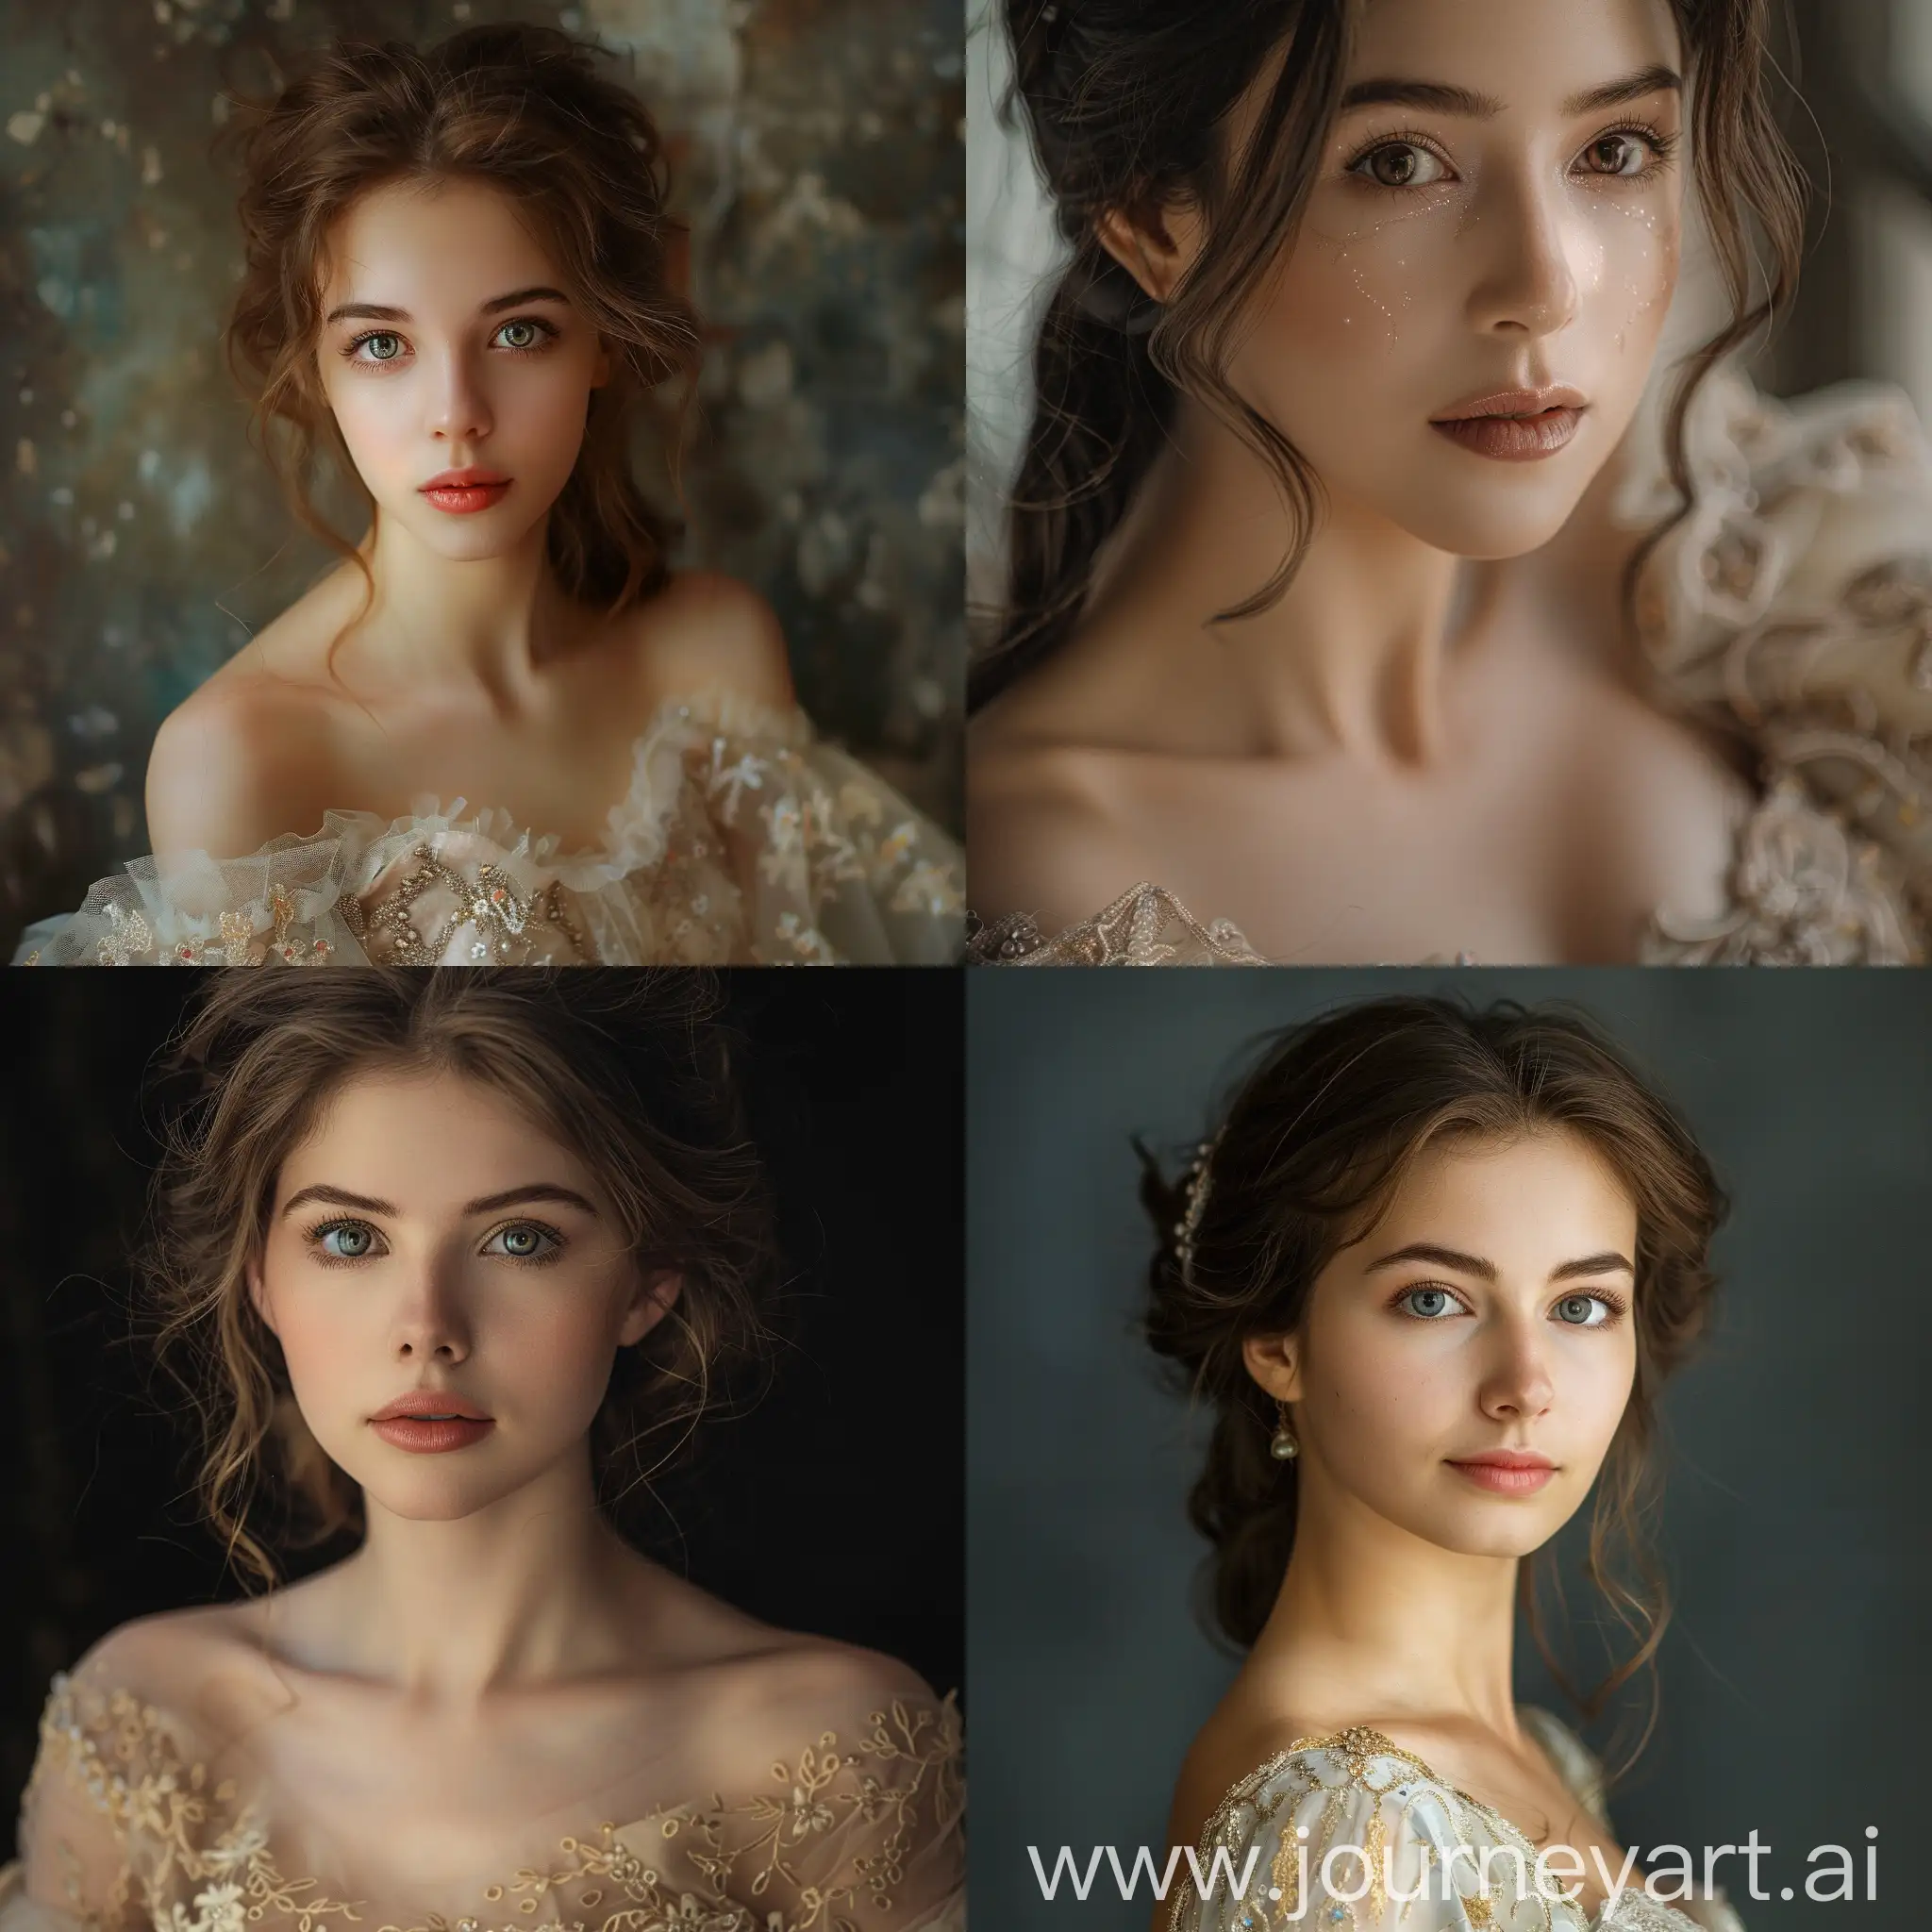 Elegant-Princess-Portrait-Captivating-25YearOld-Woman-in-Regal-Attire